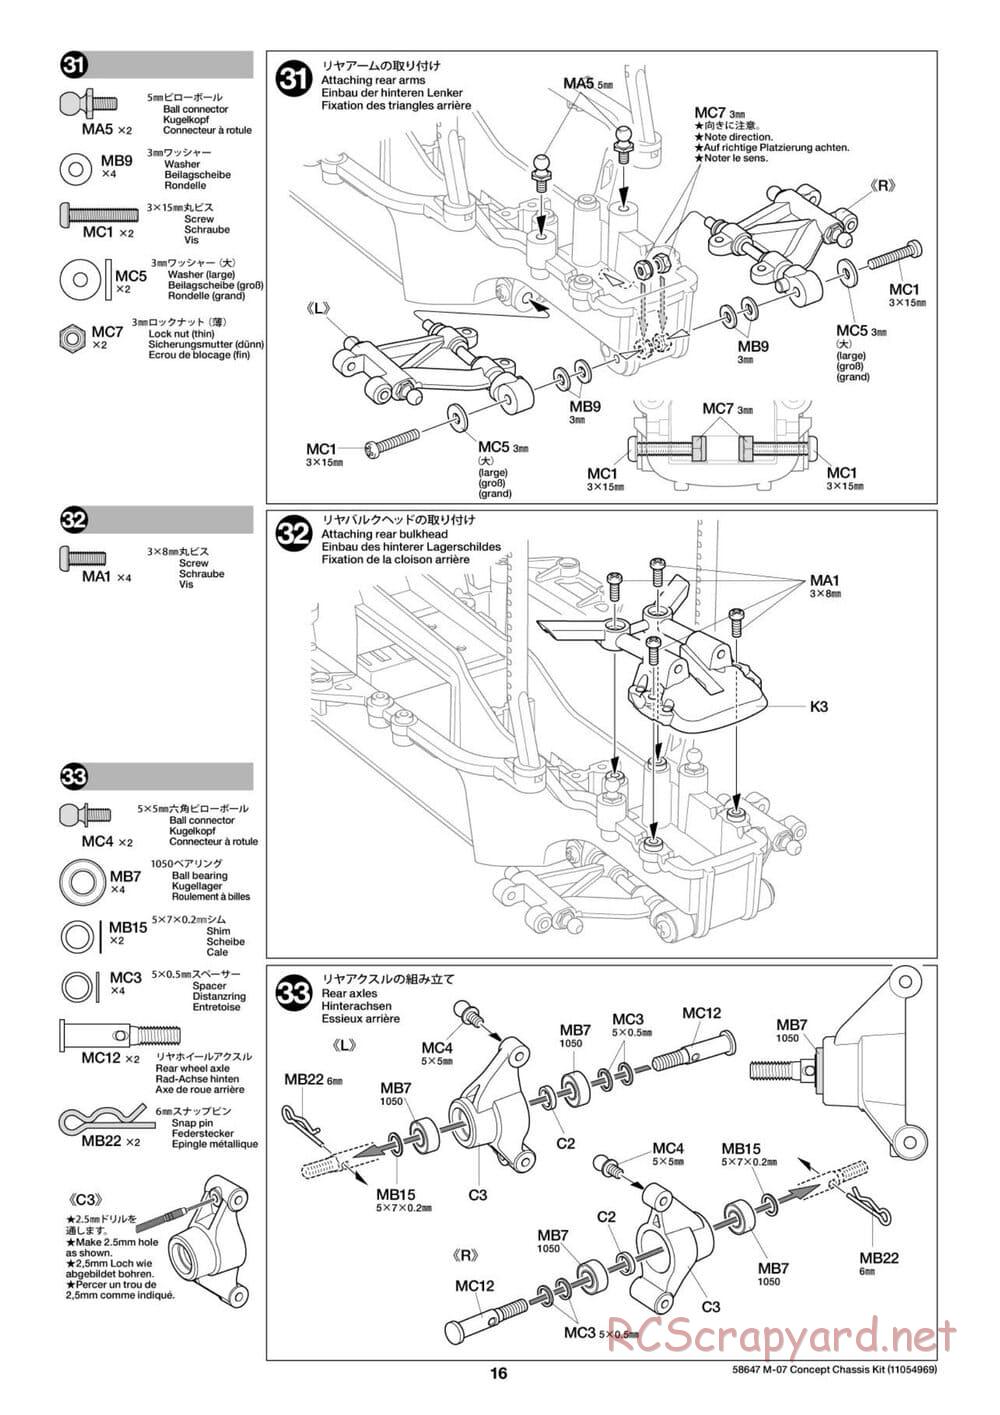 Tamiya - M-07 Concept Chassis - Manual - Page 16